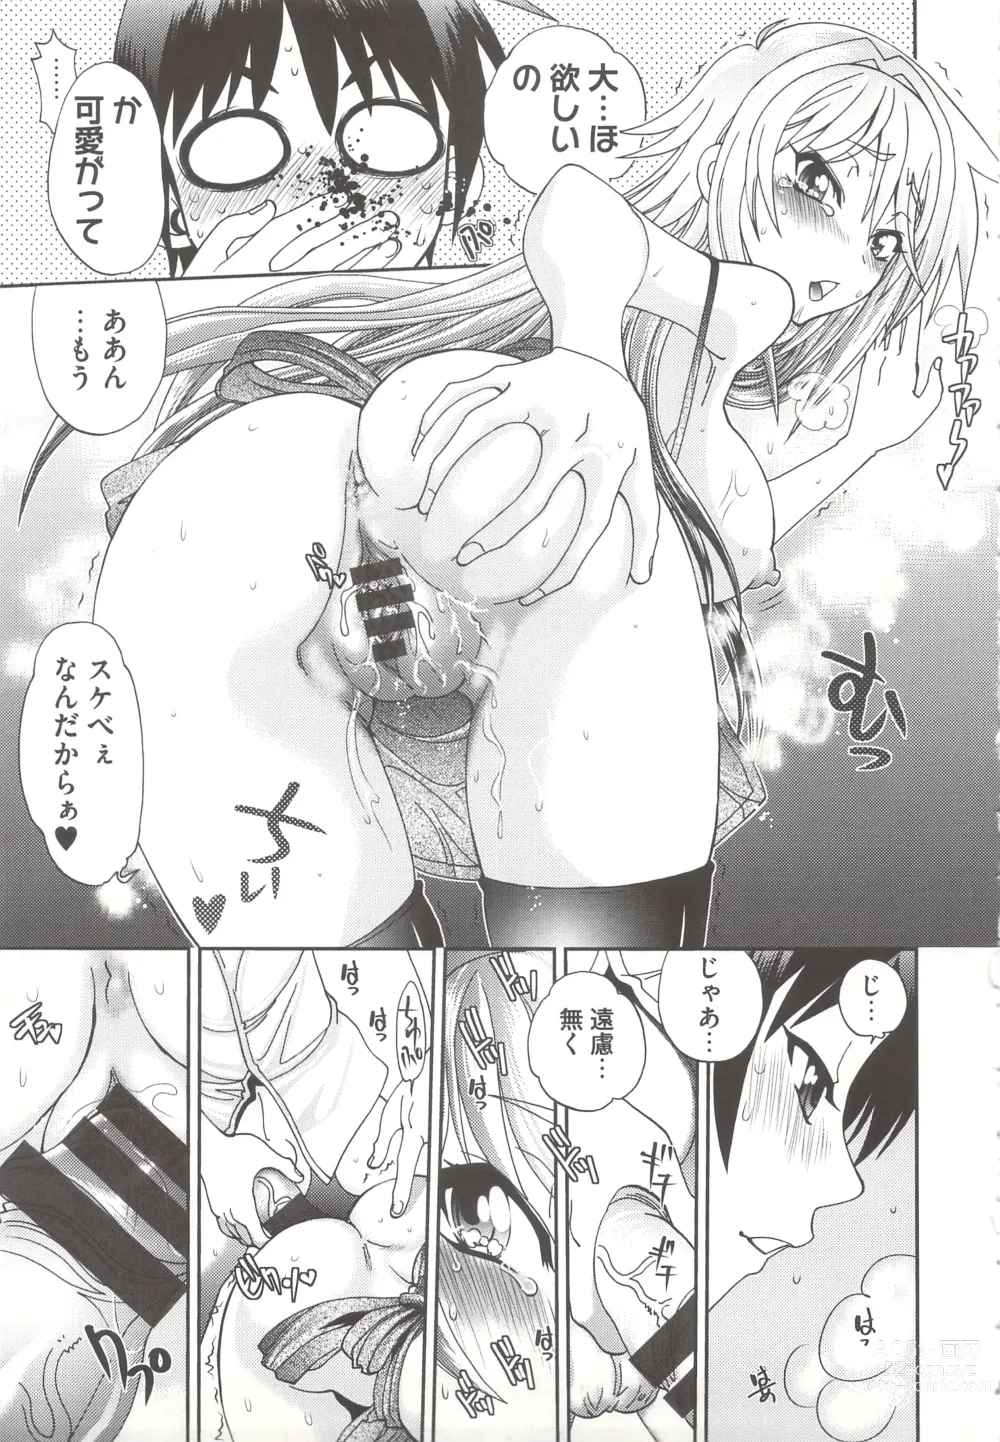 Page 21 of manga Tsujidou-san no Virgin Road Adult Edition